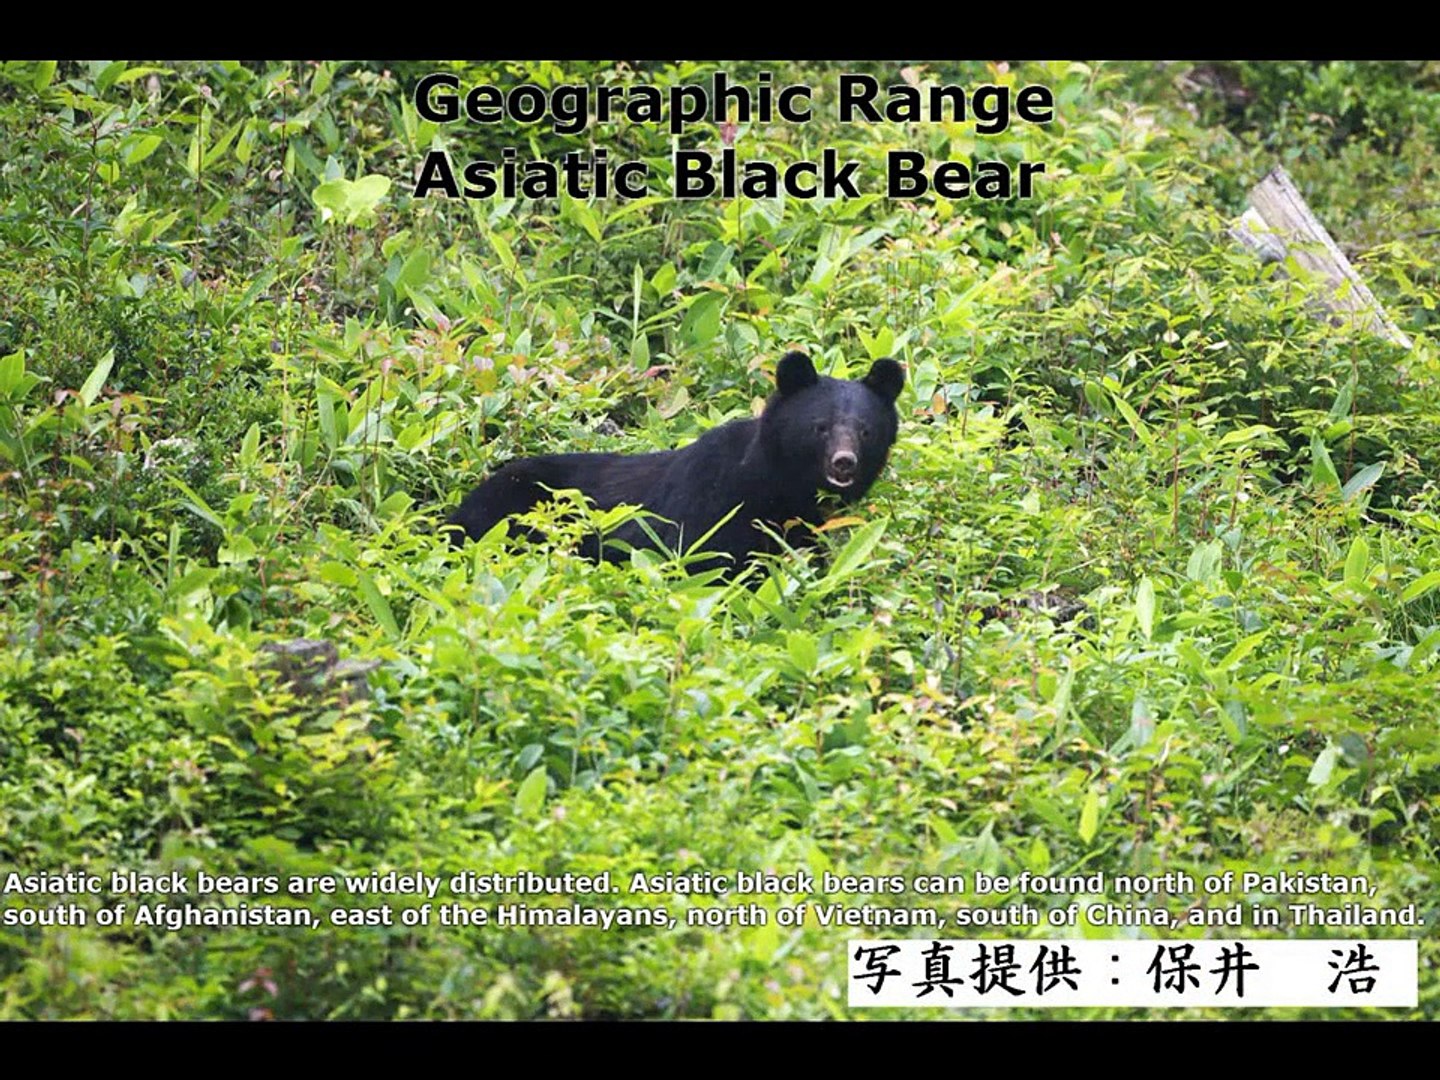 Asiatic Black Bear , Sloth Bear & Sun Bear - The Differences